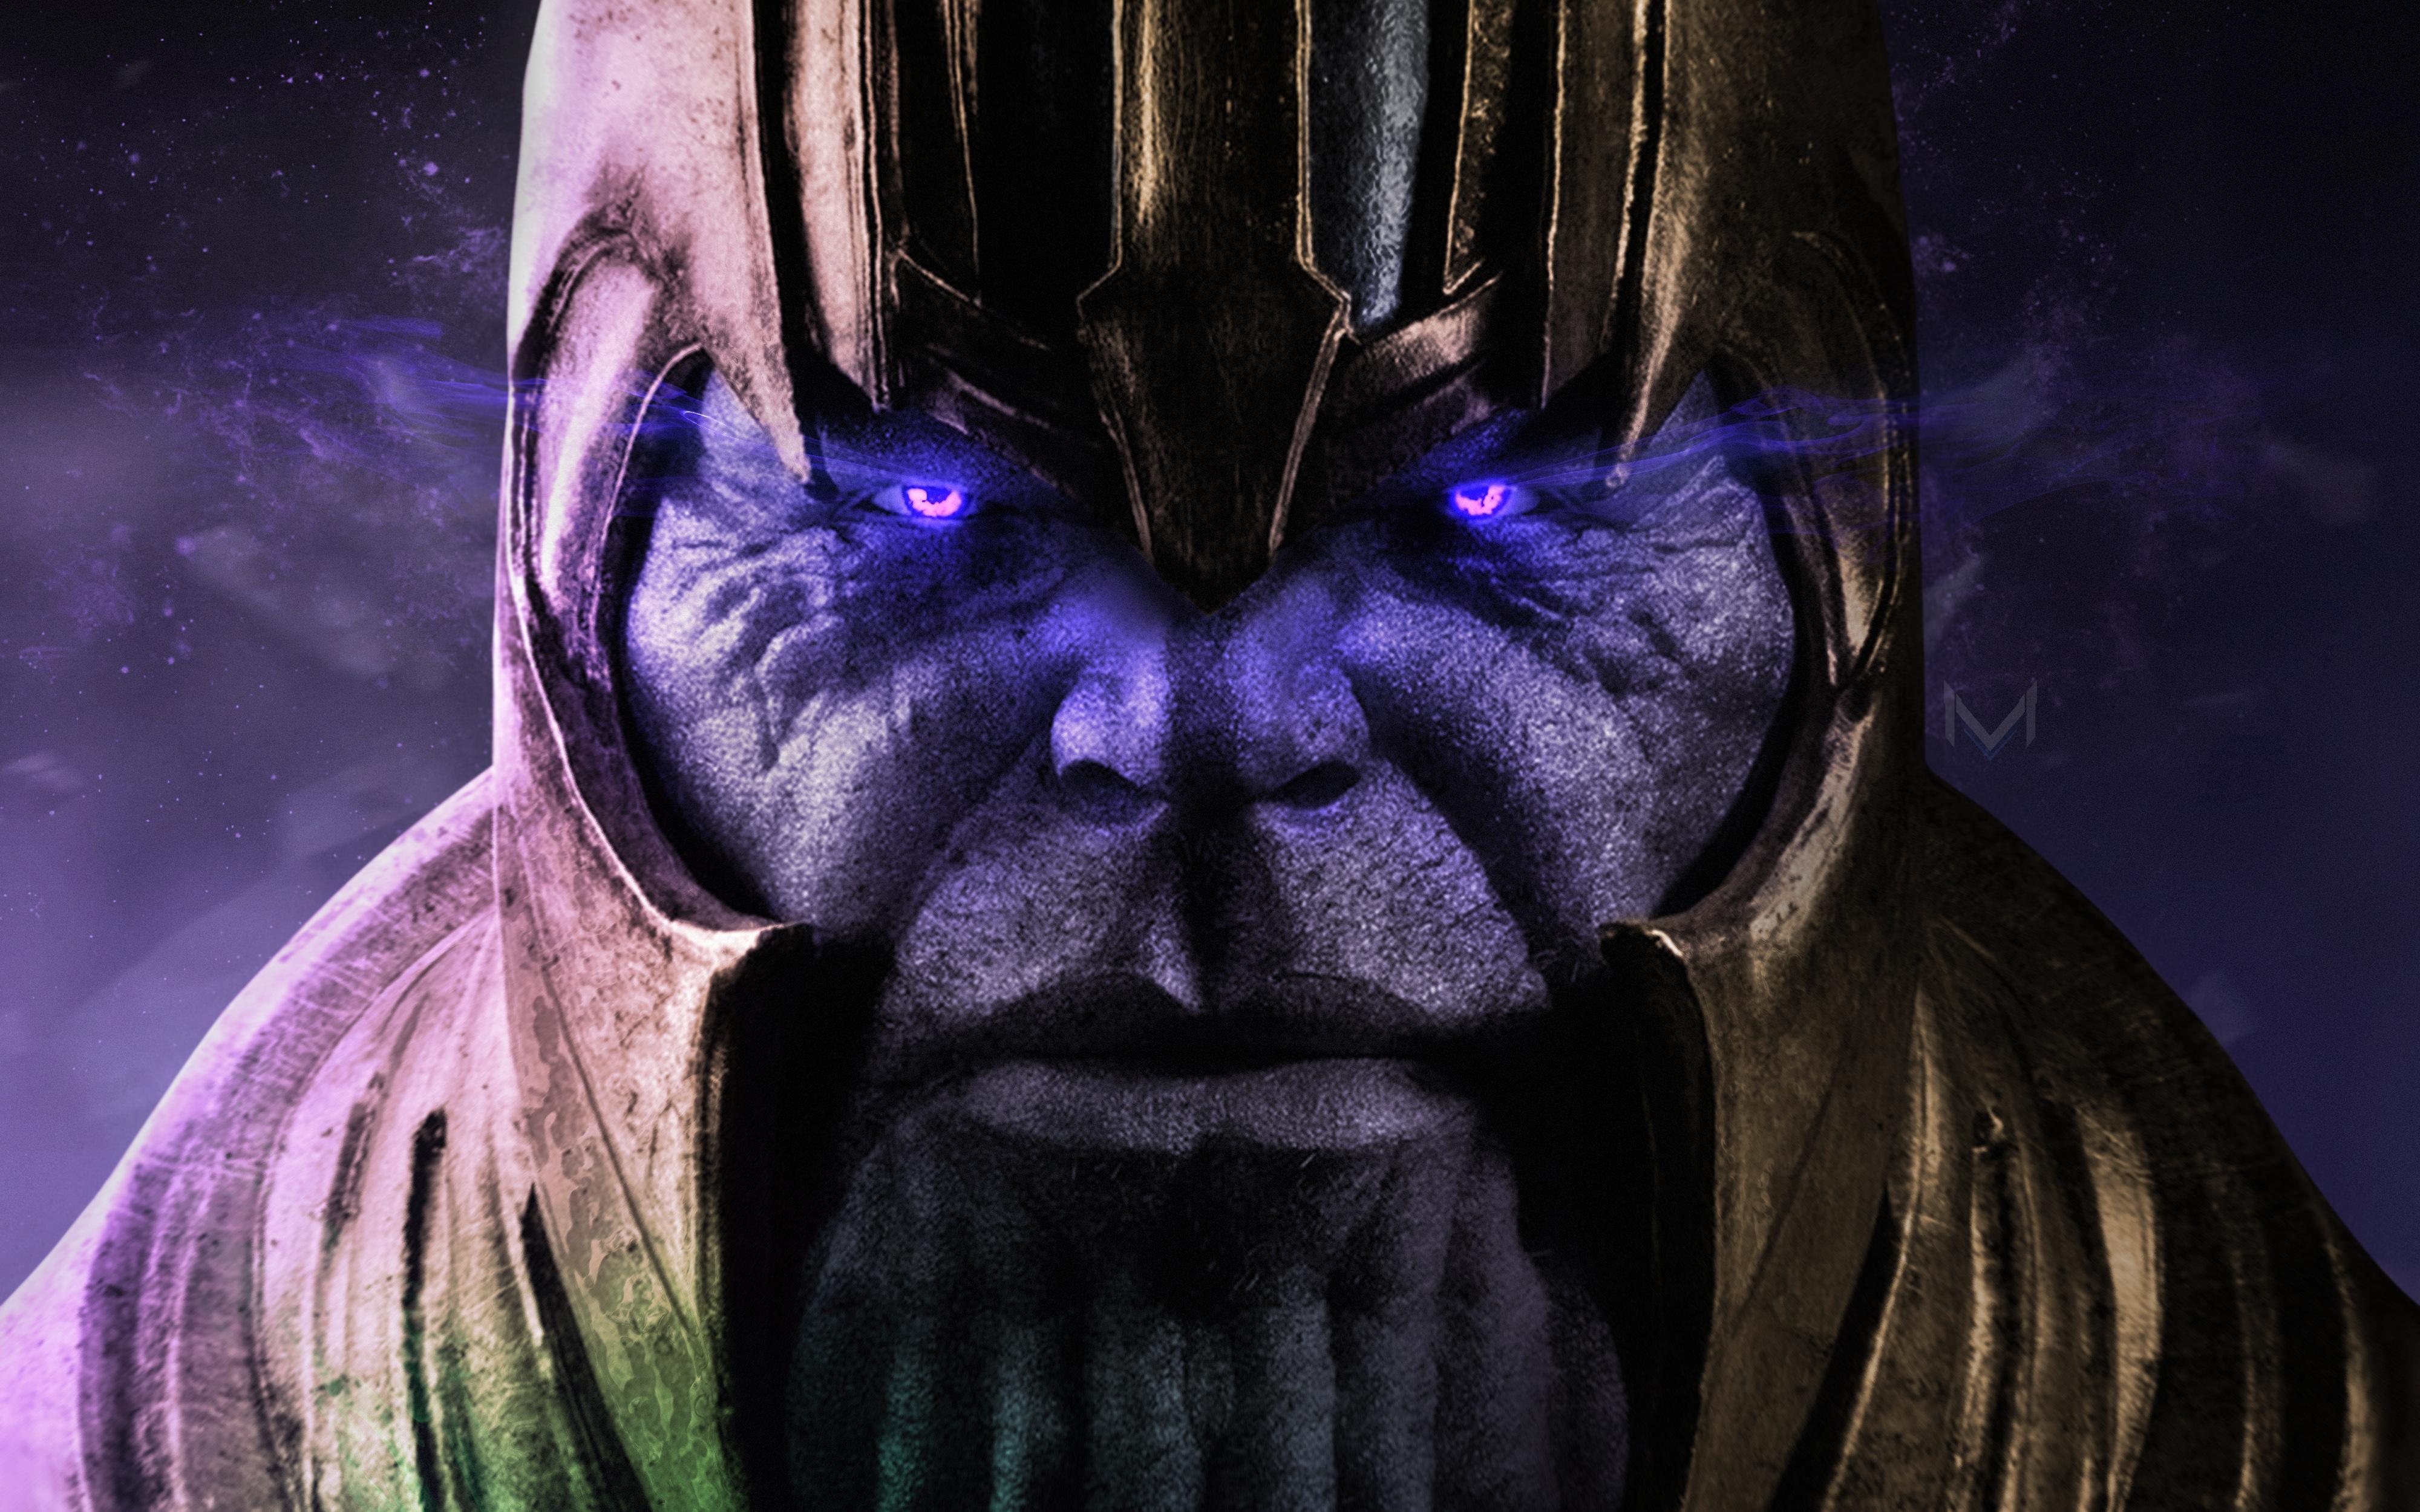 Thanos 4k Ultra HD Wallpaper. Background Imagex2500